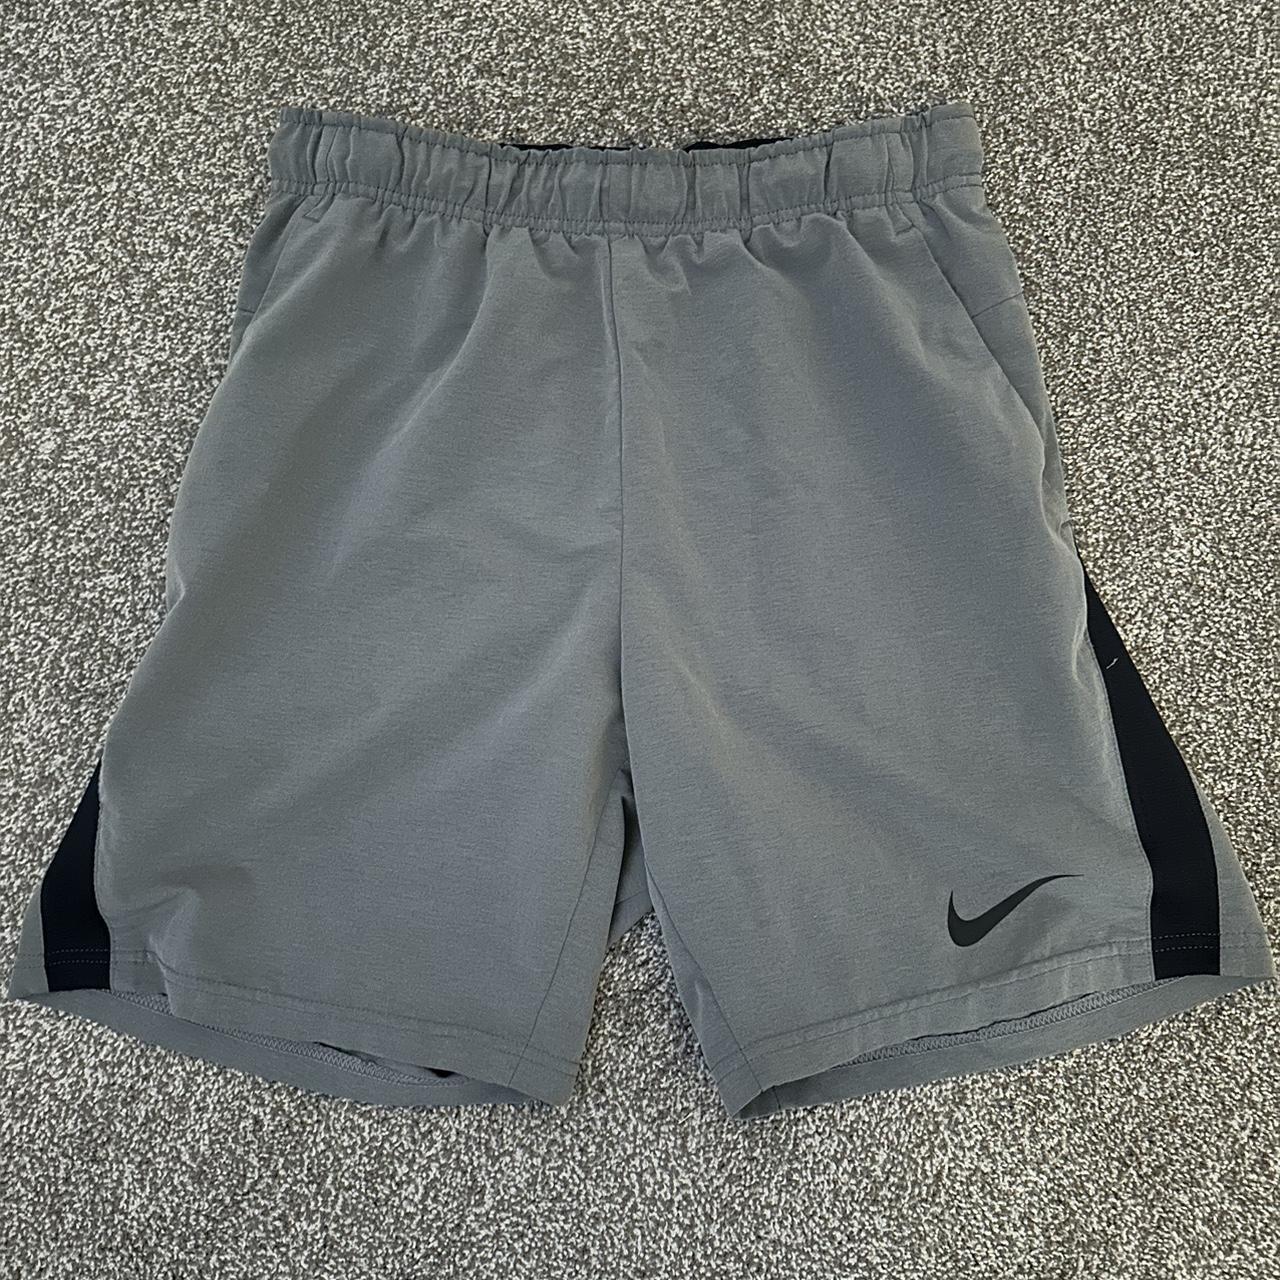 Nike Men's Grey and Black Shorts | Depop